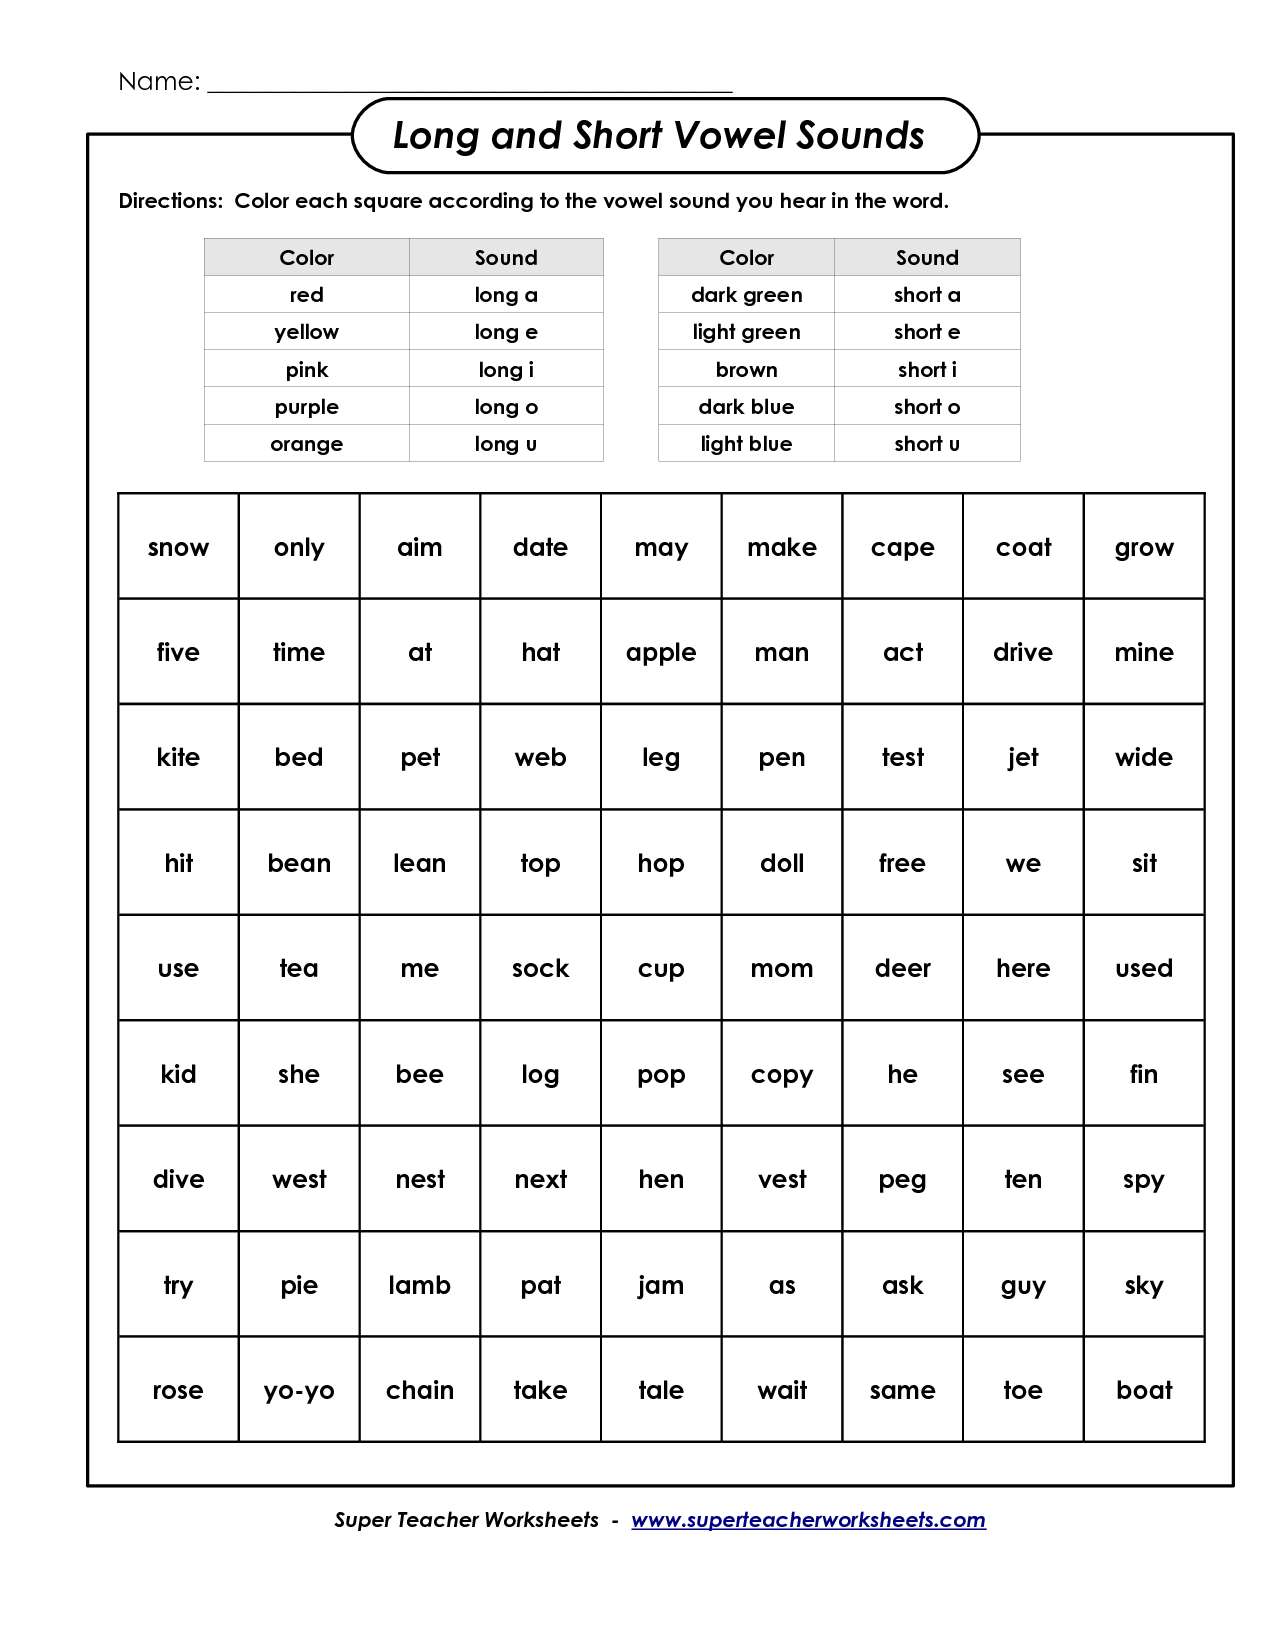 Long and Short Vowel Coloring Worksheet Image